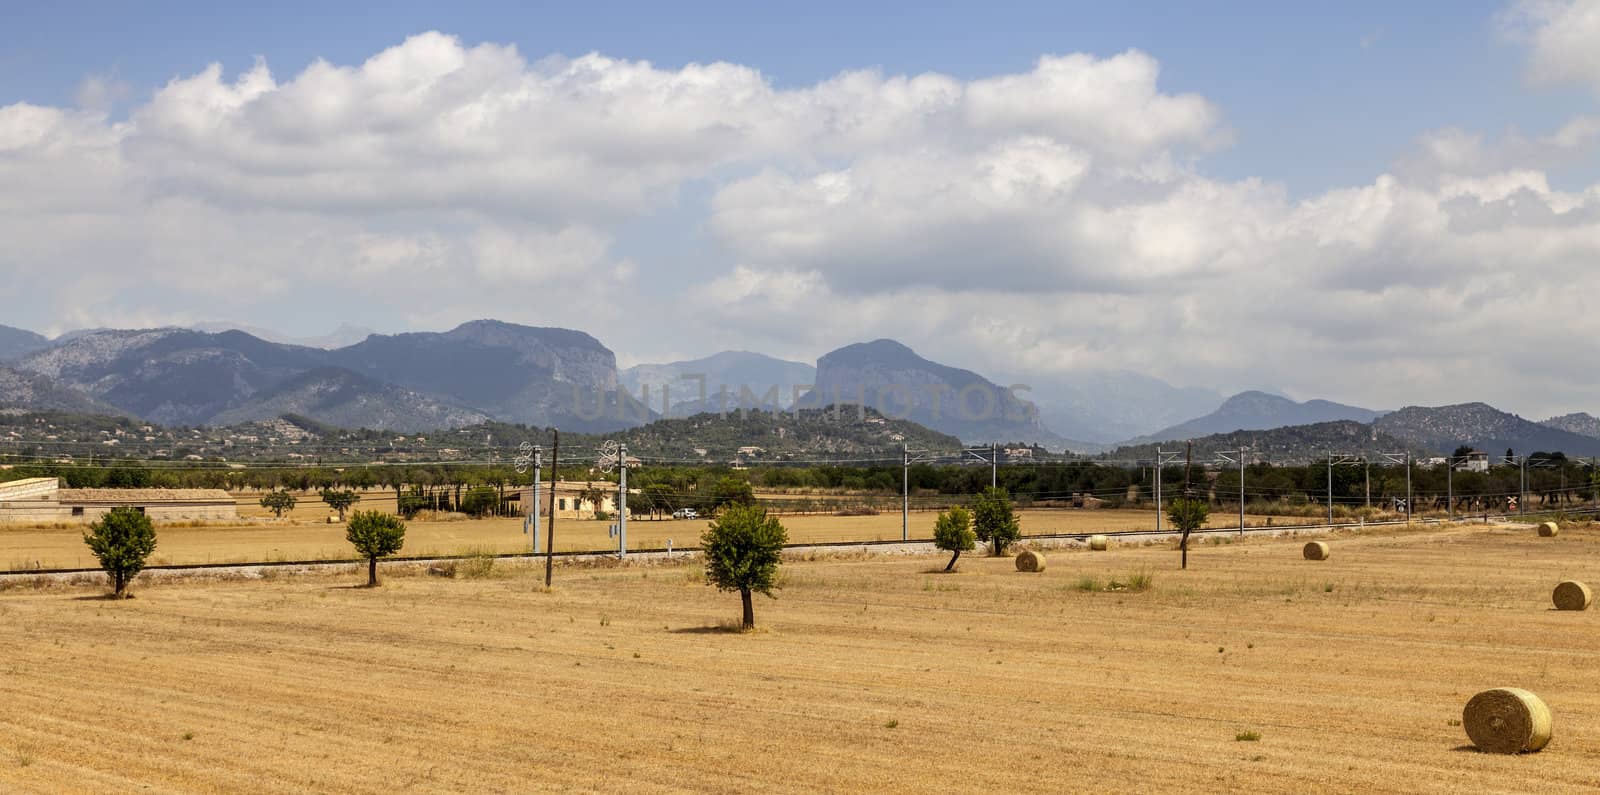 Landscape in Mallorca by RazvanPhotography